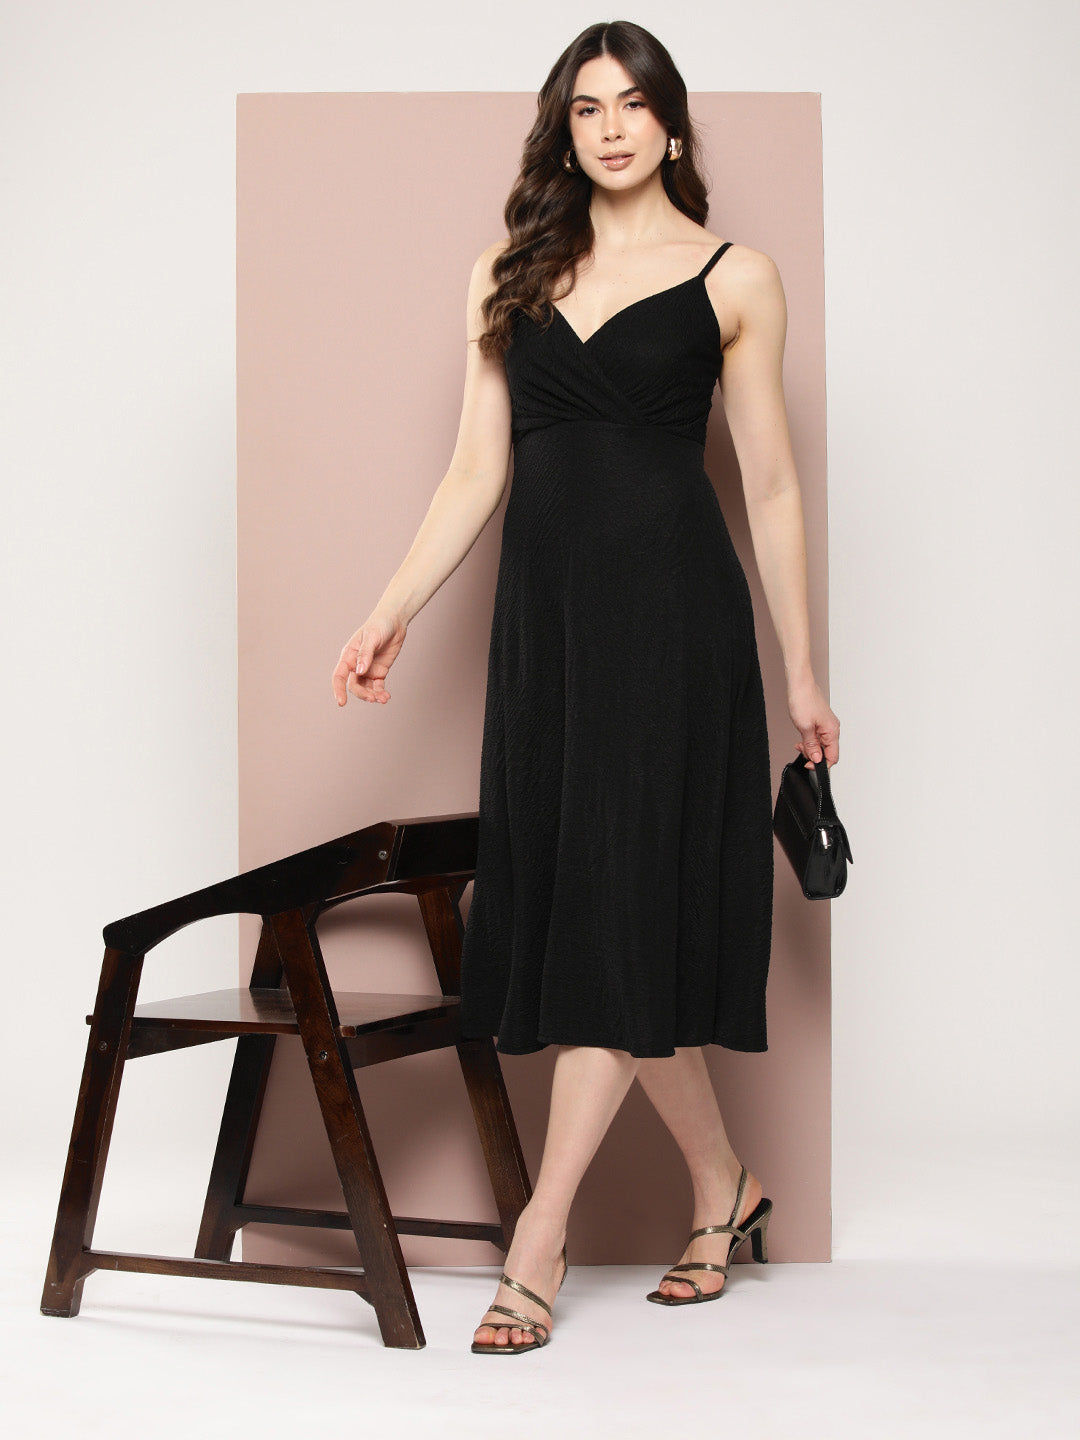 Stylish Black midi dress.